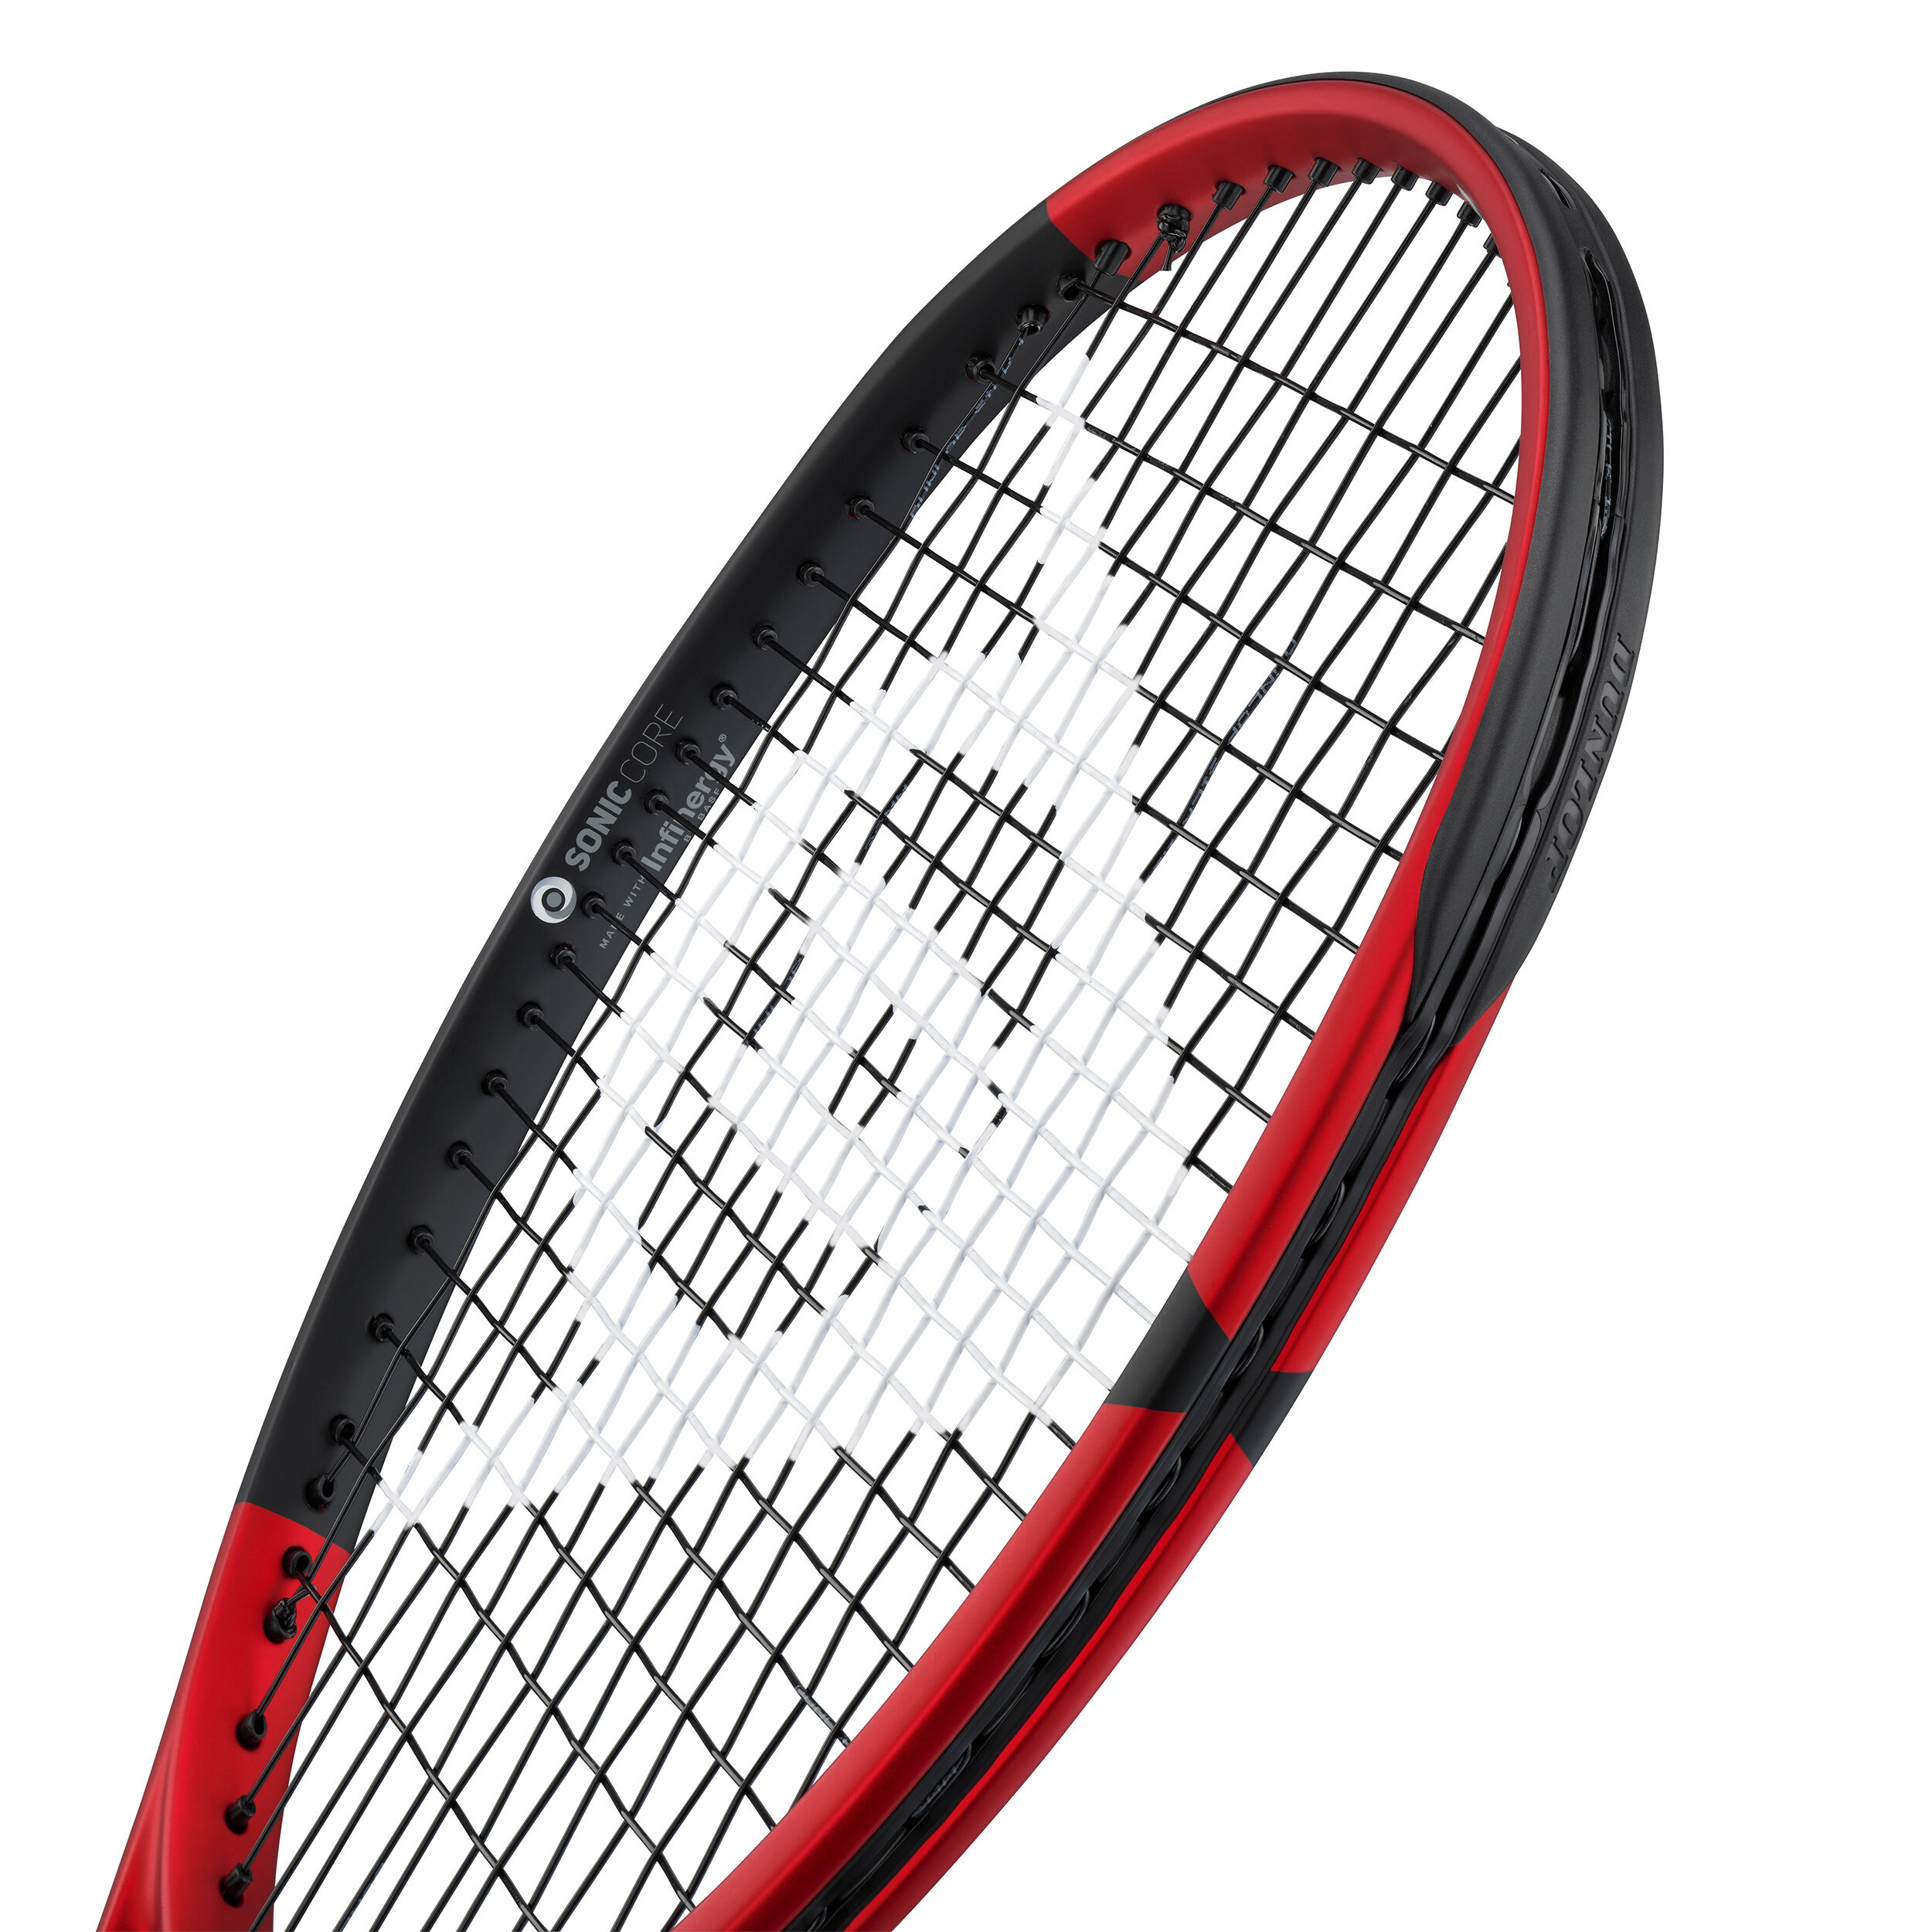 Buy Dunlop CX 200 online | Tennis Point COM